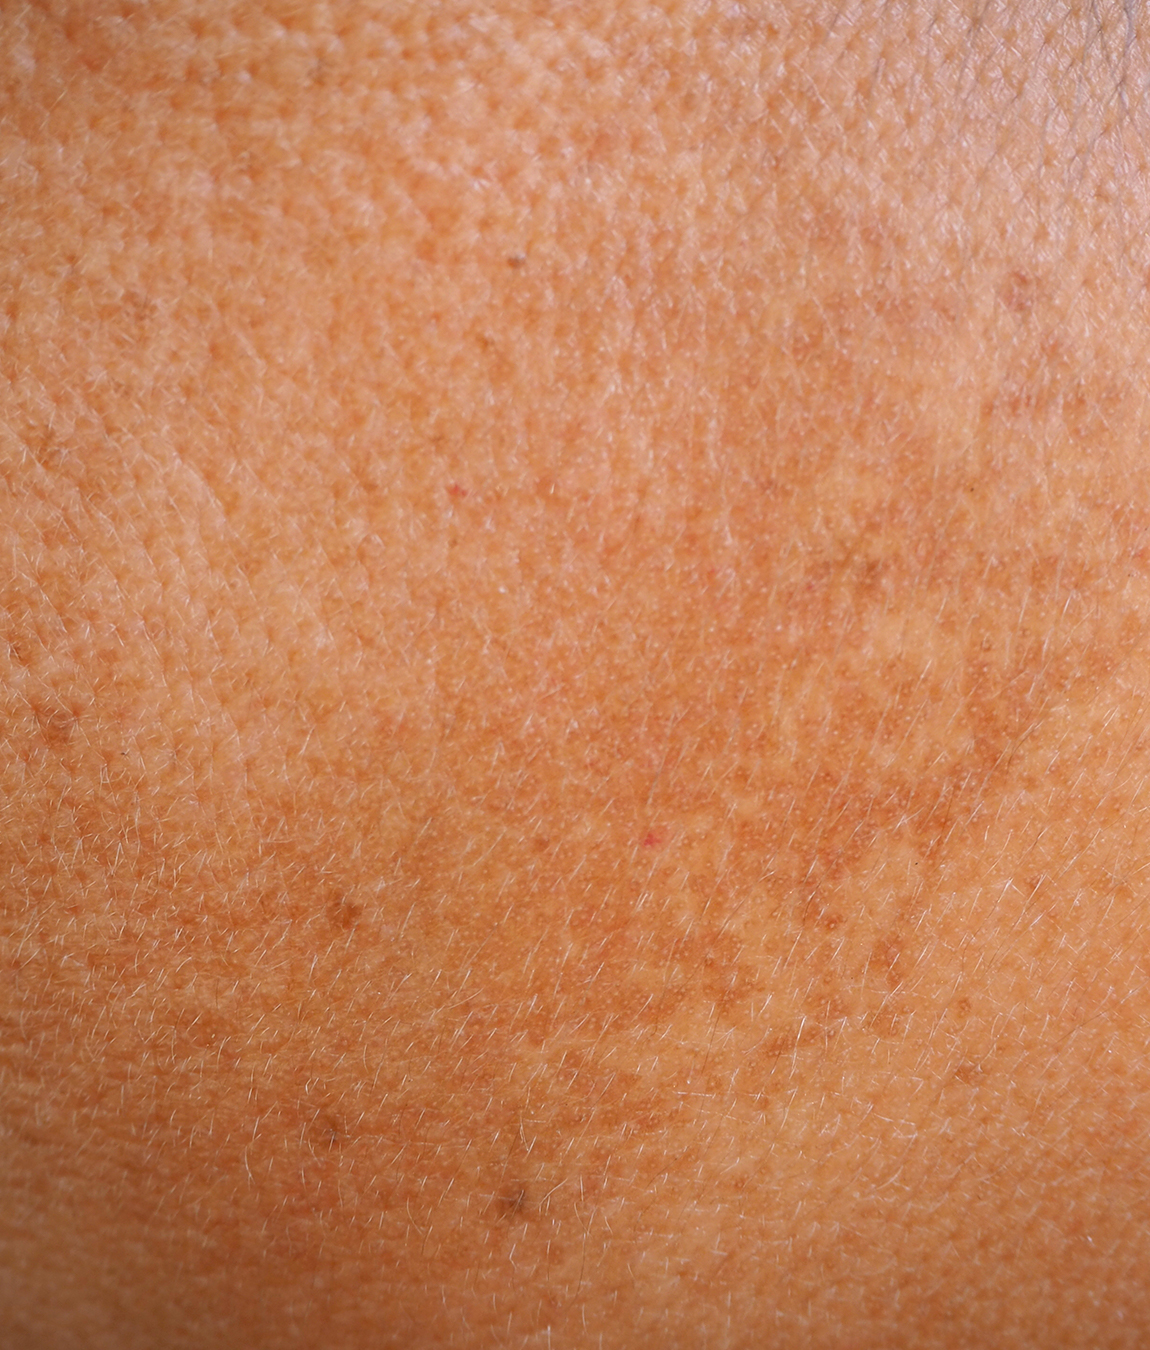 Close-up on sun damage